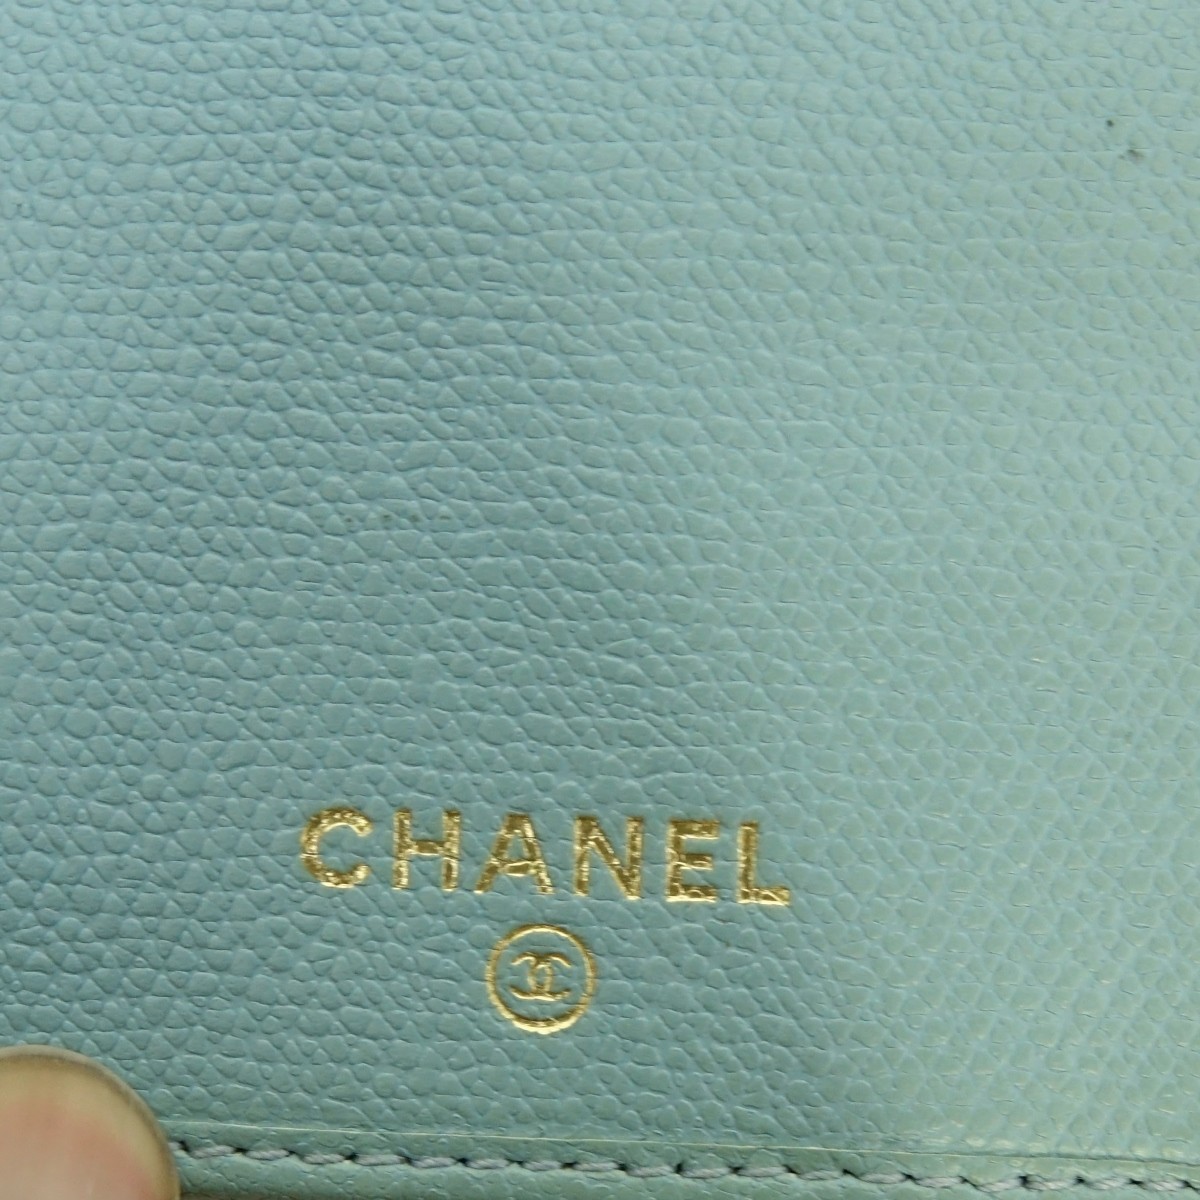 Chanel Light Blue Leather Long Bifold Wallet